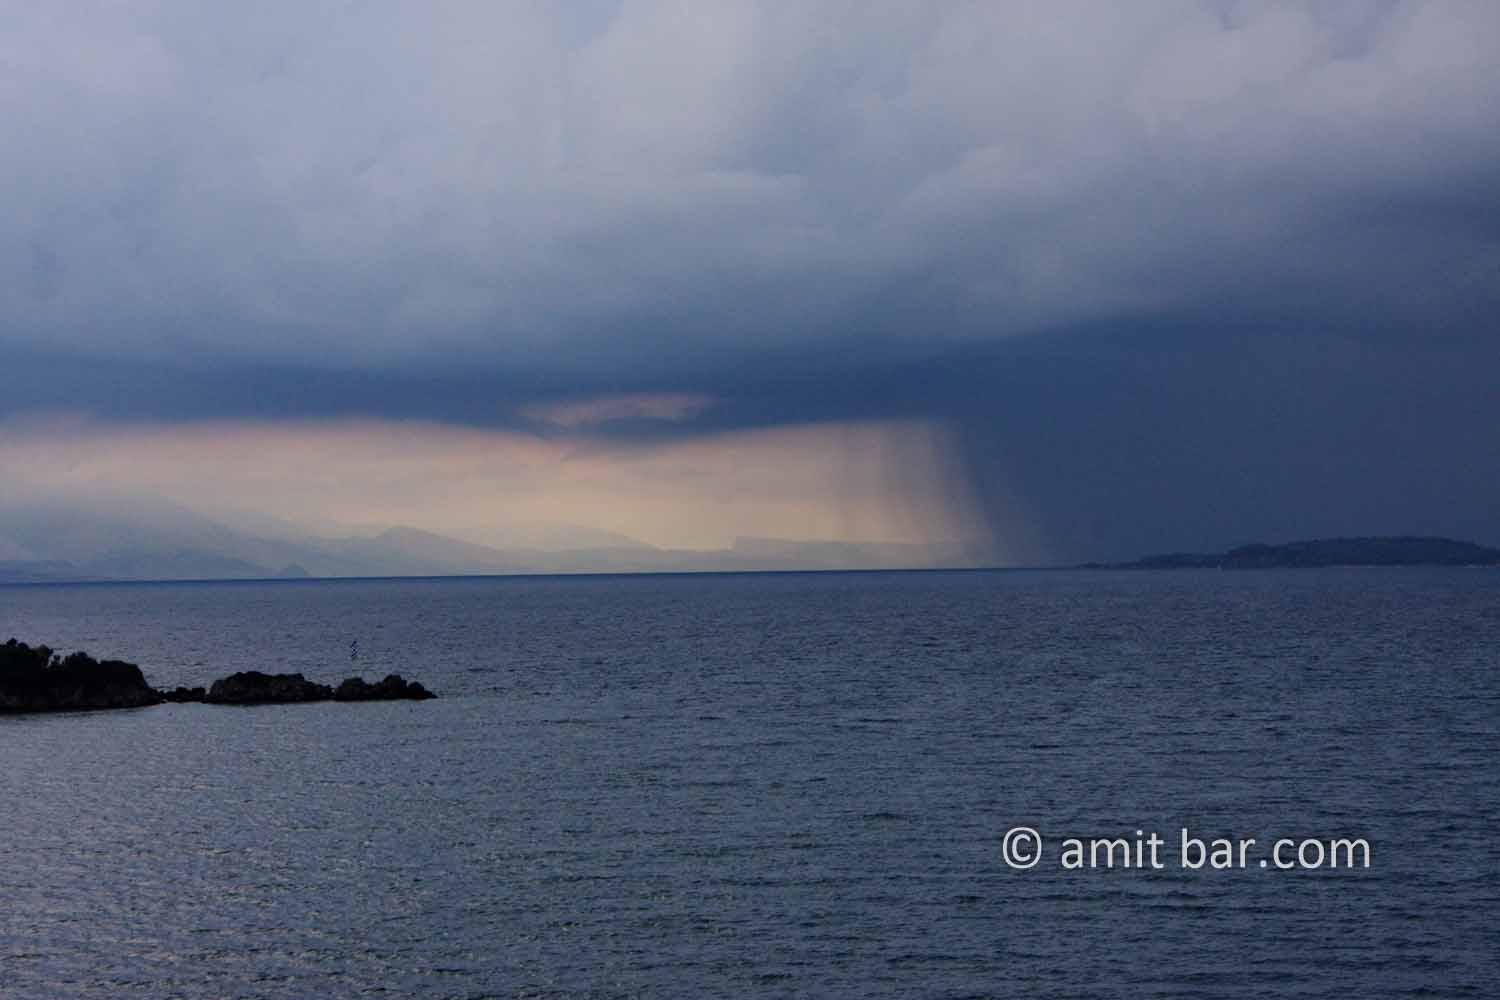 Corfu: Storm above Corfu: Rainstorm above Corfu city, Greece